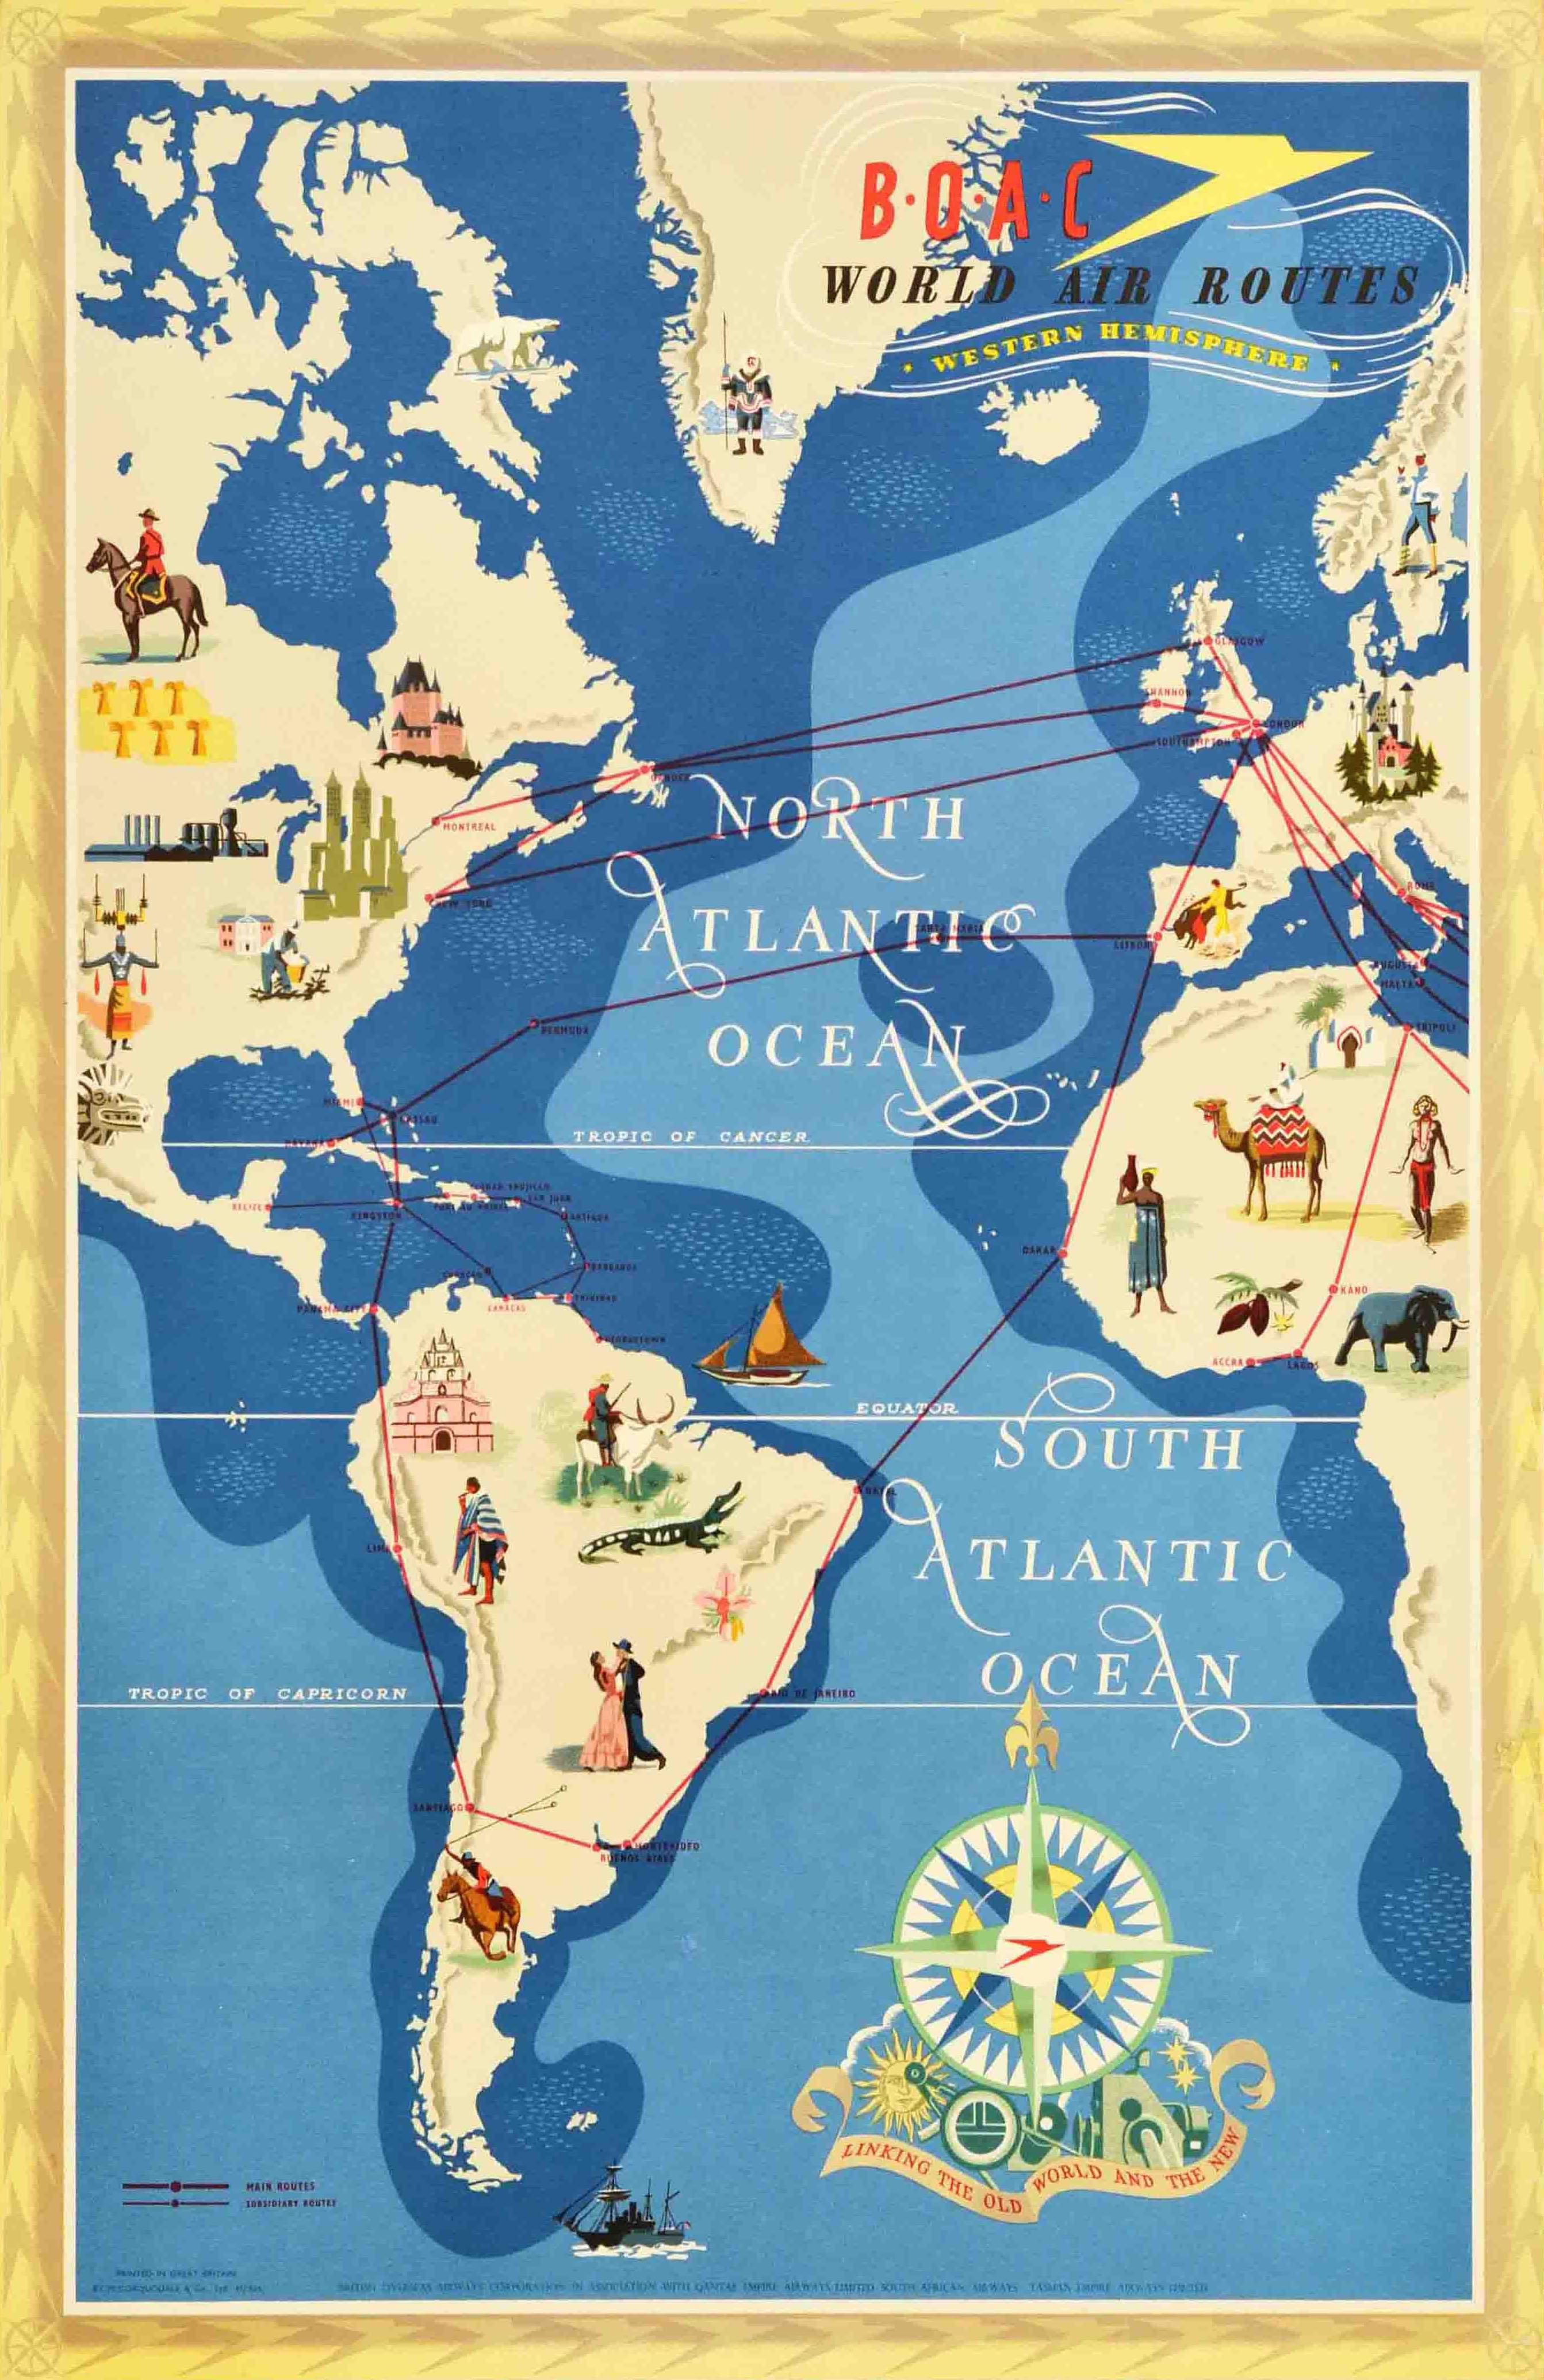 Unknown Print - Original Vintage Travel Poster BOAC World Air Routes Western Hemisphere Design